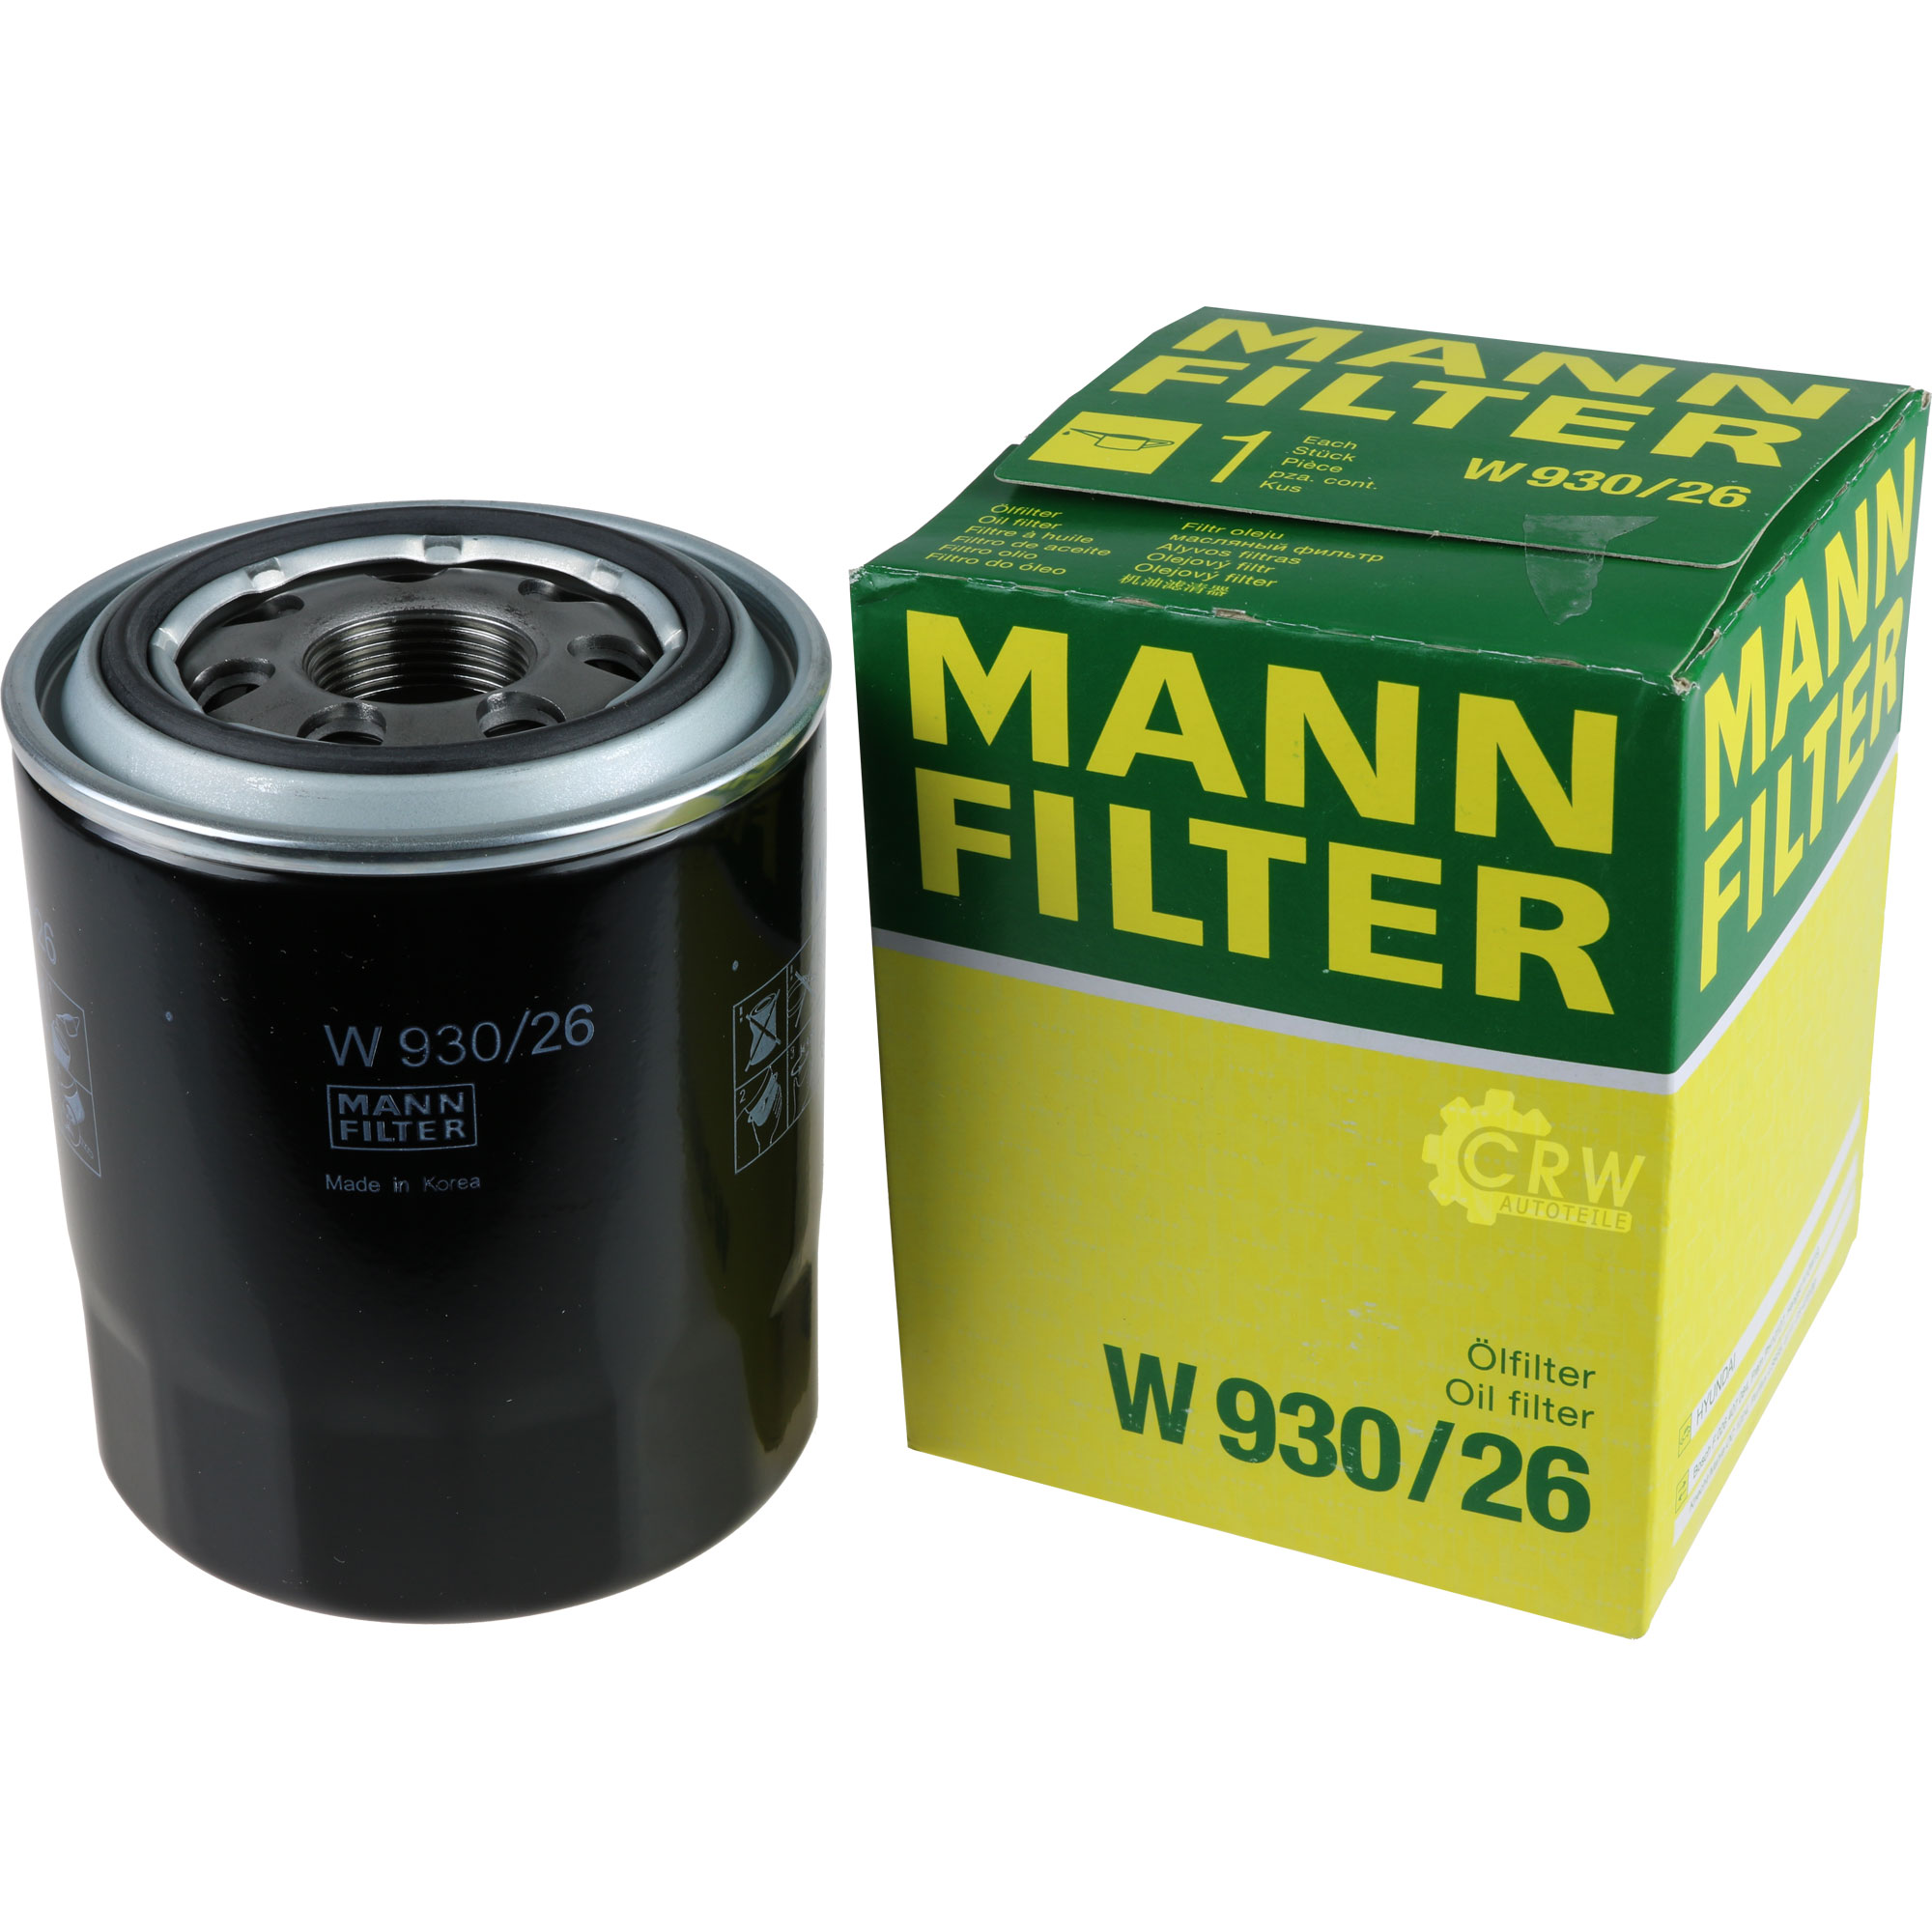 Масляный фильтр манн оригинал. W93026 Mann фильтр. Mann-Filter w 930/26. Oc540 фильтр масляный. Фильтр масляный Mann w930/20.